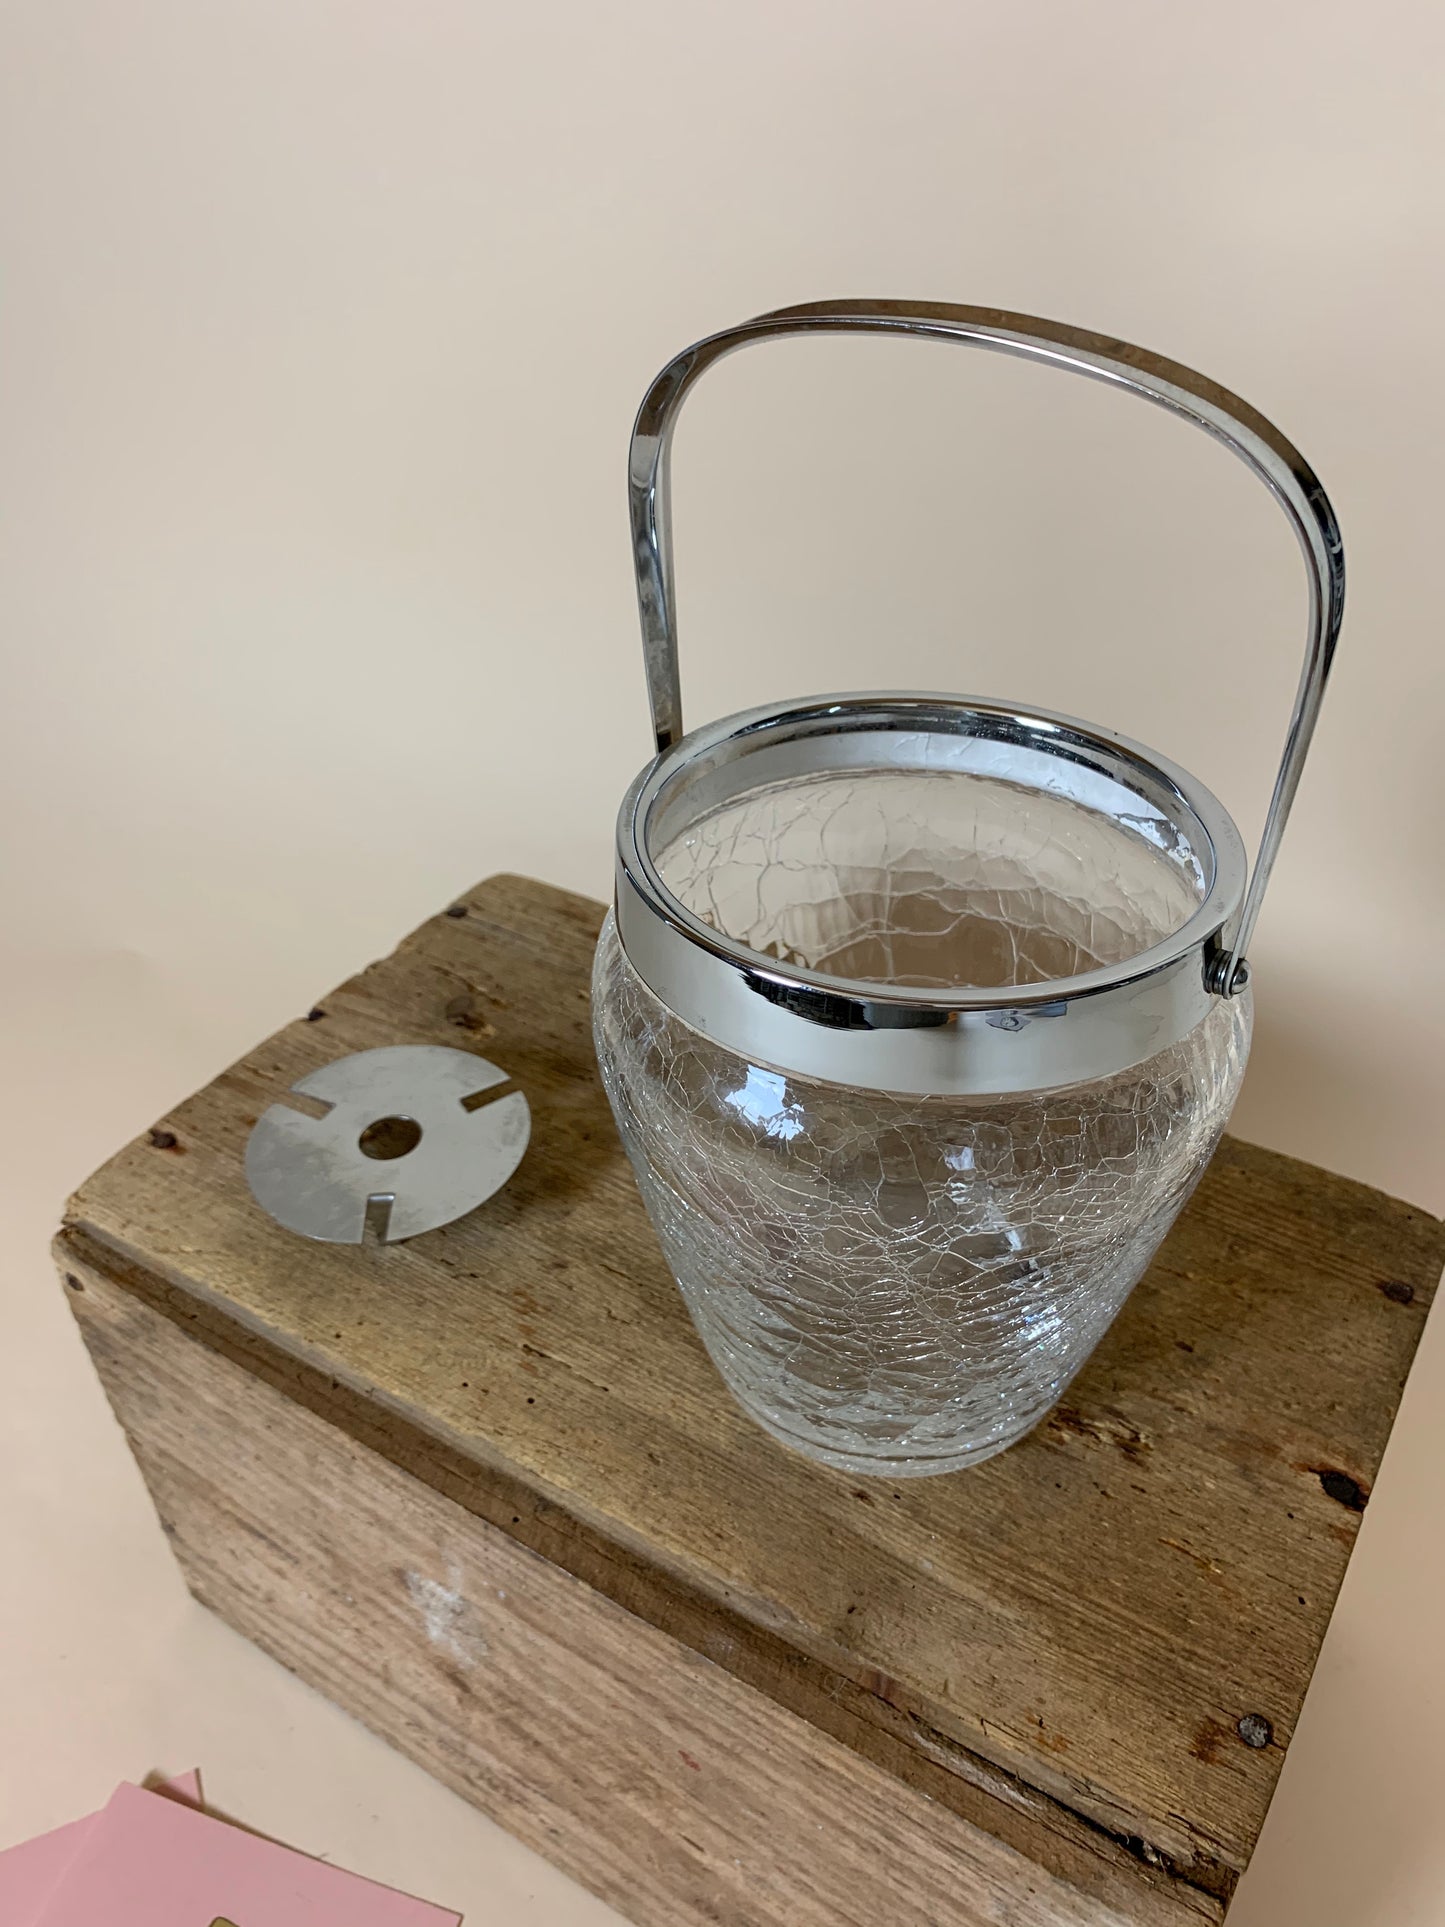 Isspand i glas med stålkant